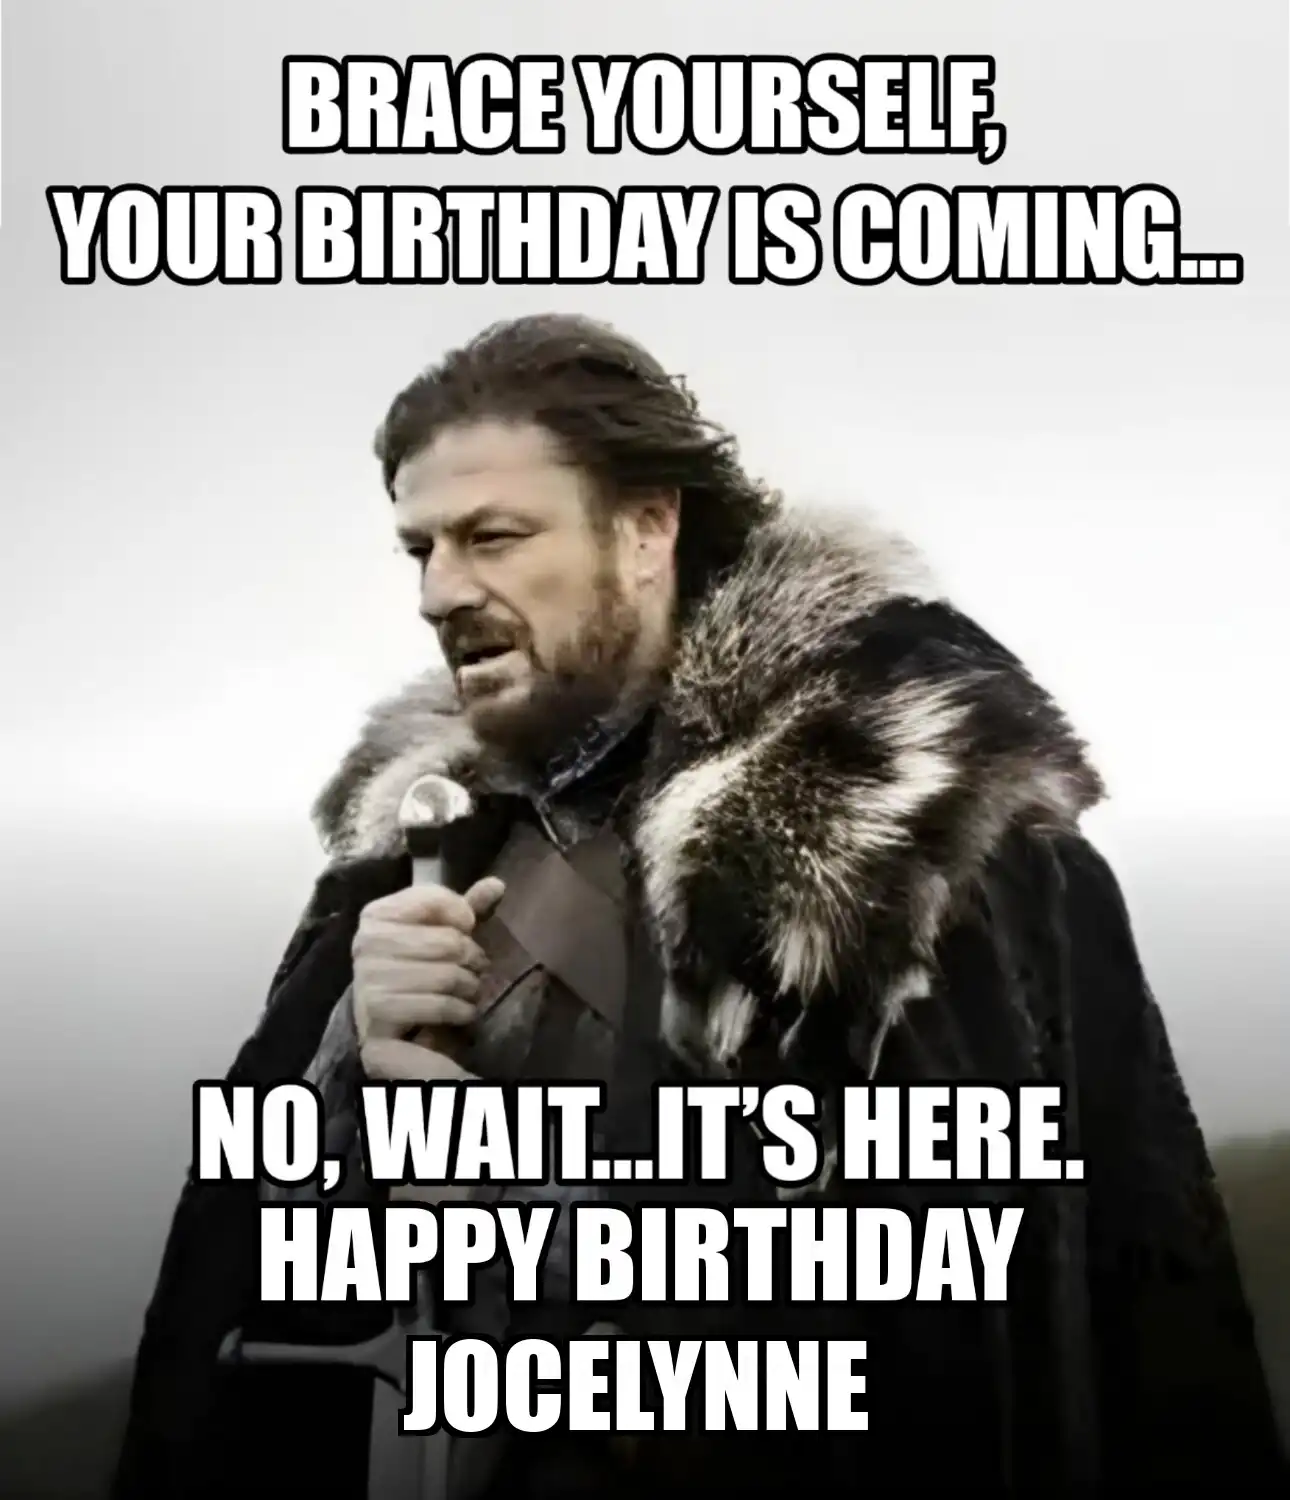 Happy Birthday Jocelynne Brace Yourself Your Birthday Is Coming Meme